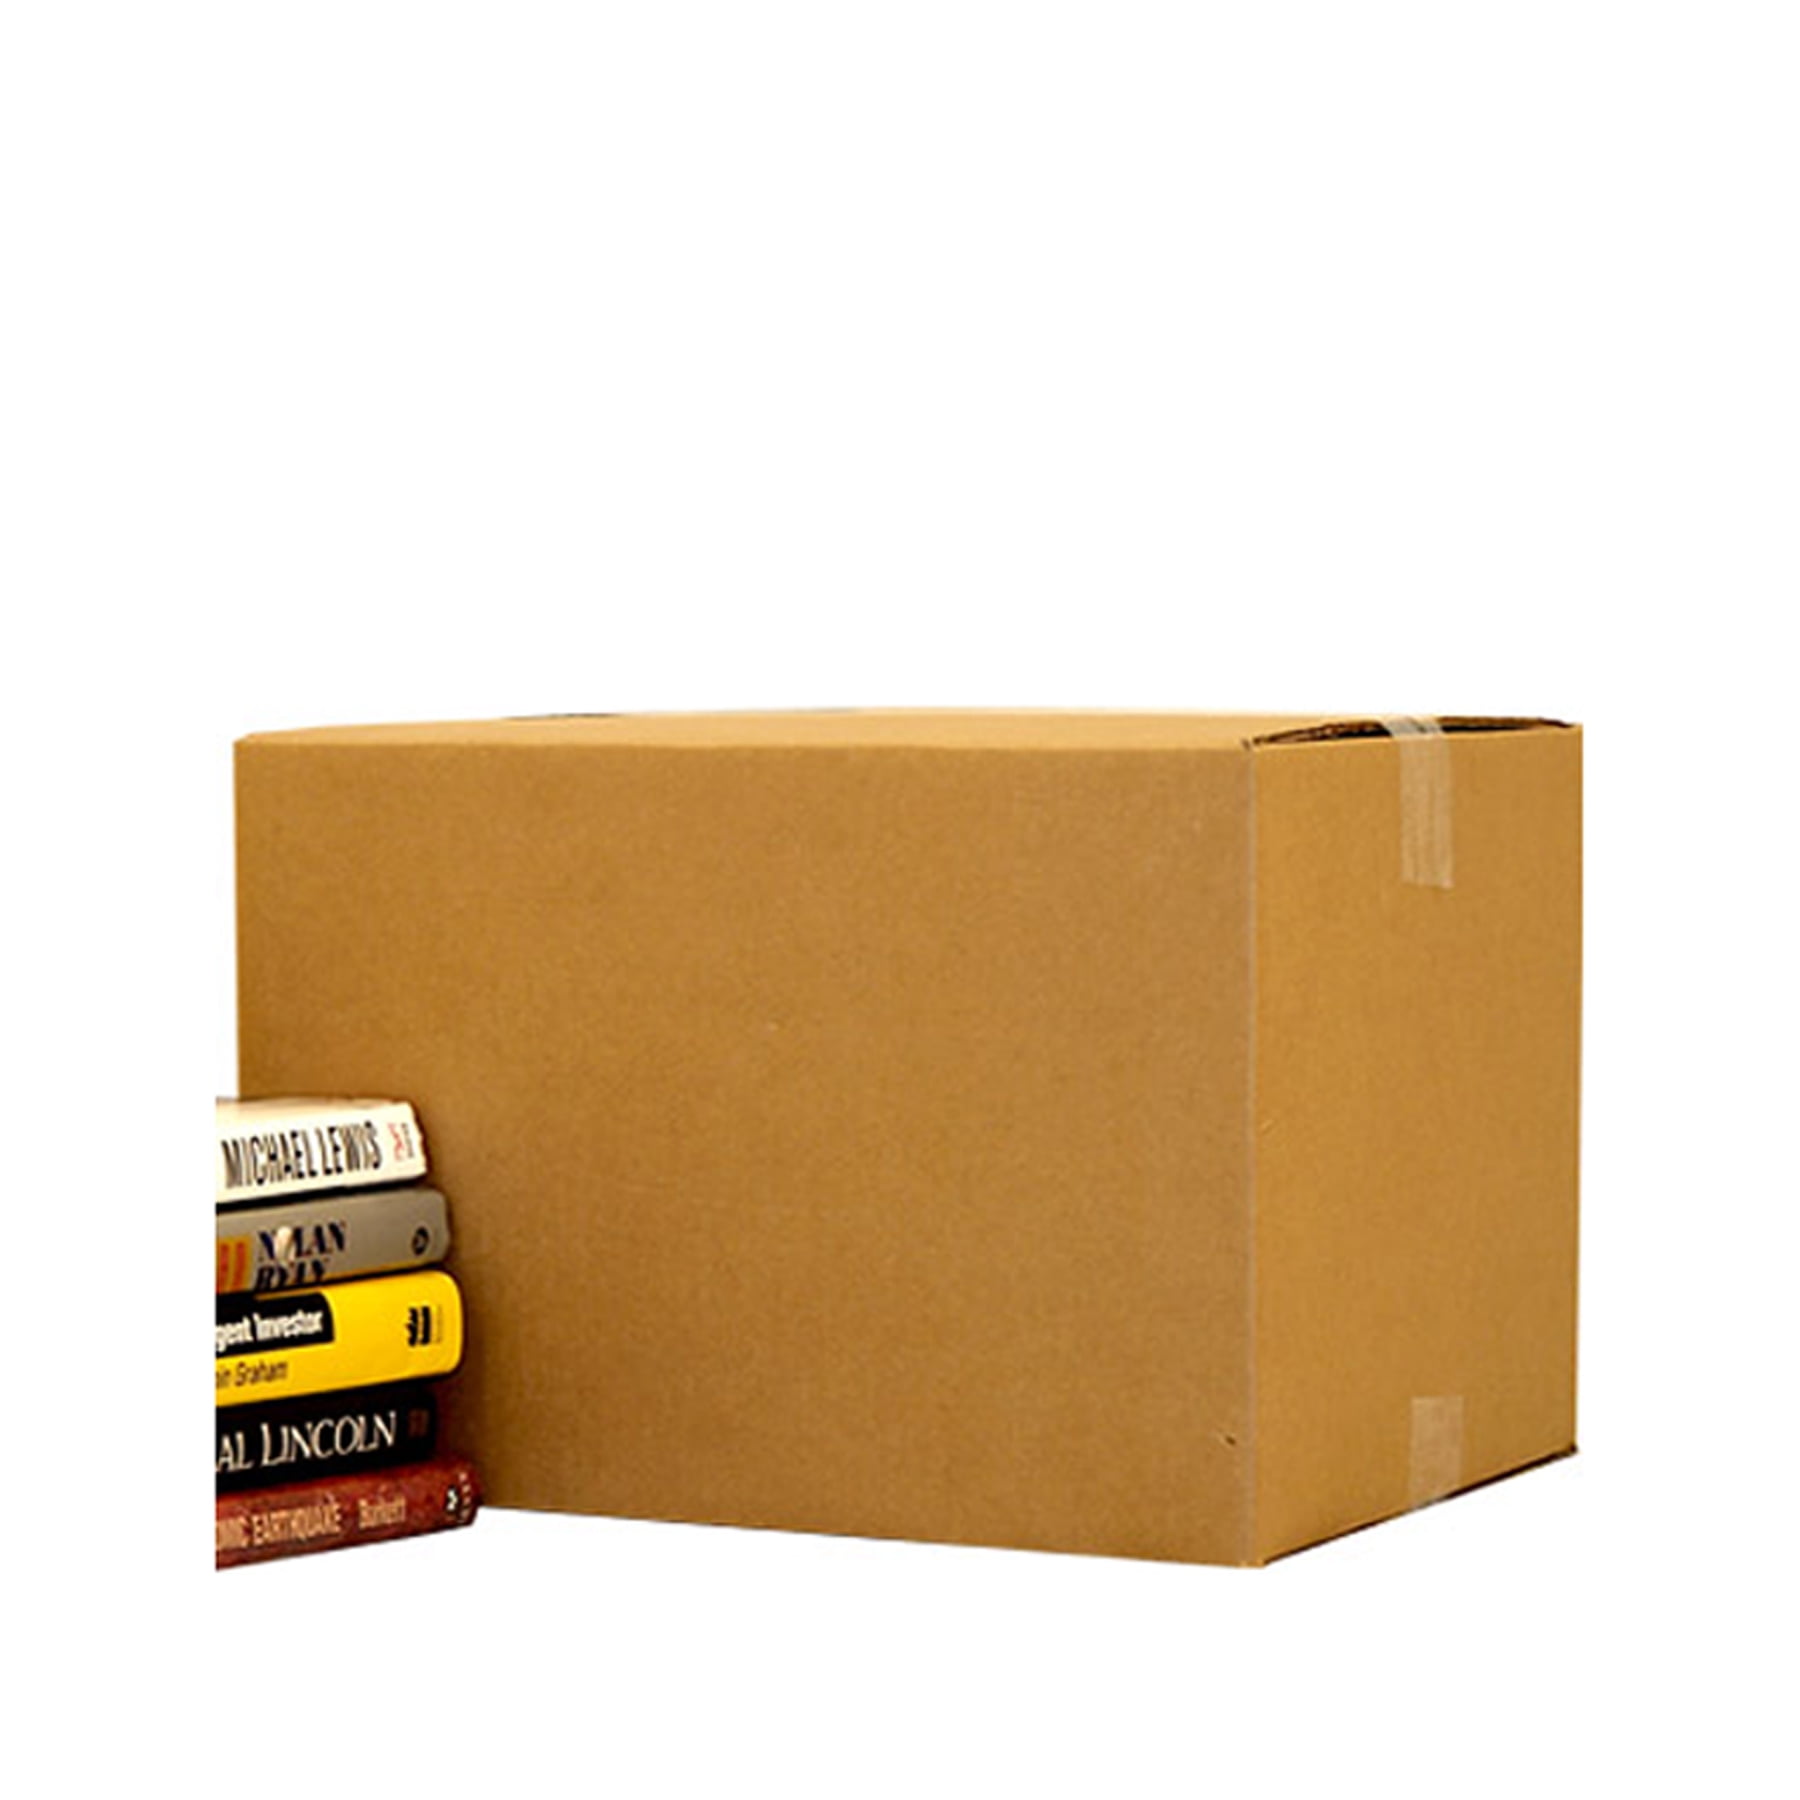 uBoxes 15 Small Moving Boxes - 16x10x10 - Cardboard Box - Walmart.com